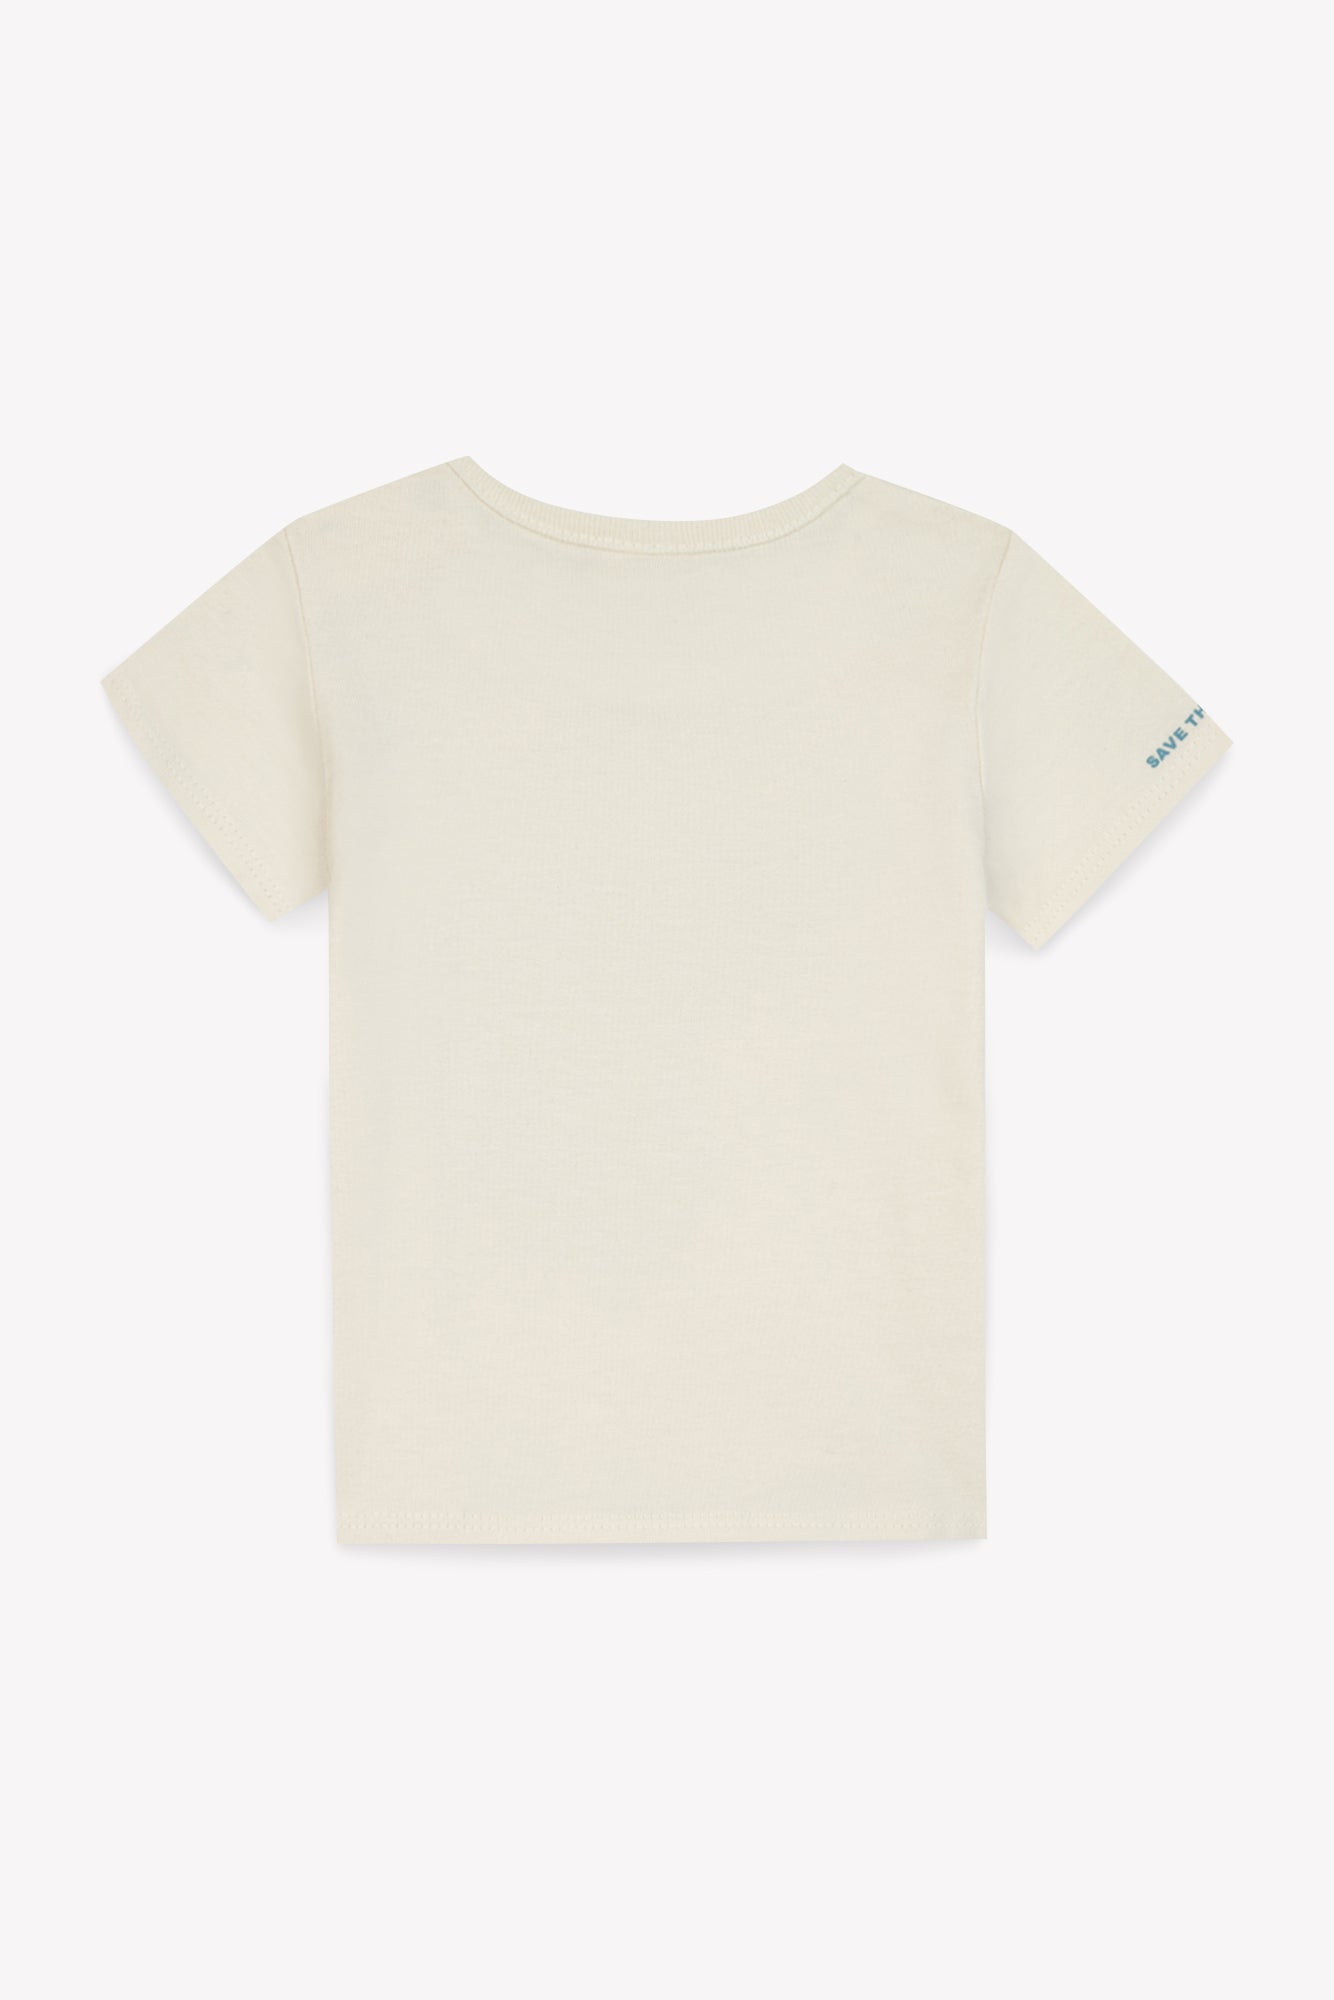 Tee-shirt - Tuba écru Bébé coton organique imprimé